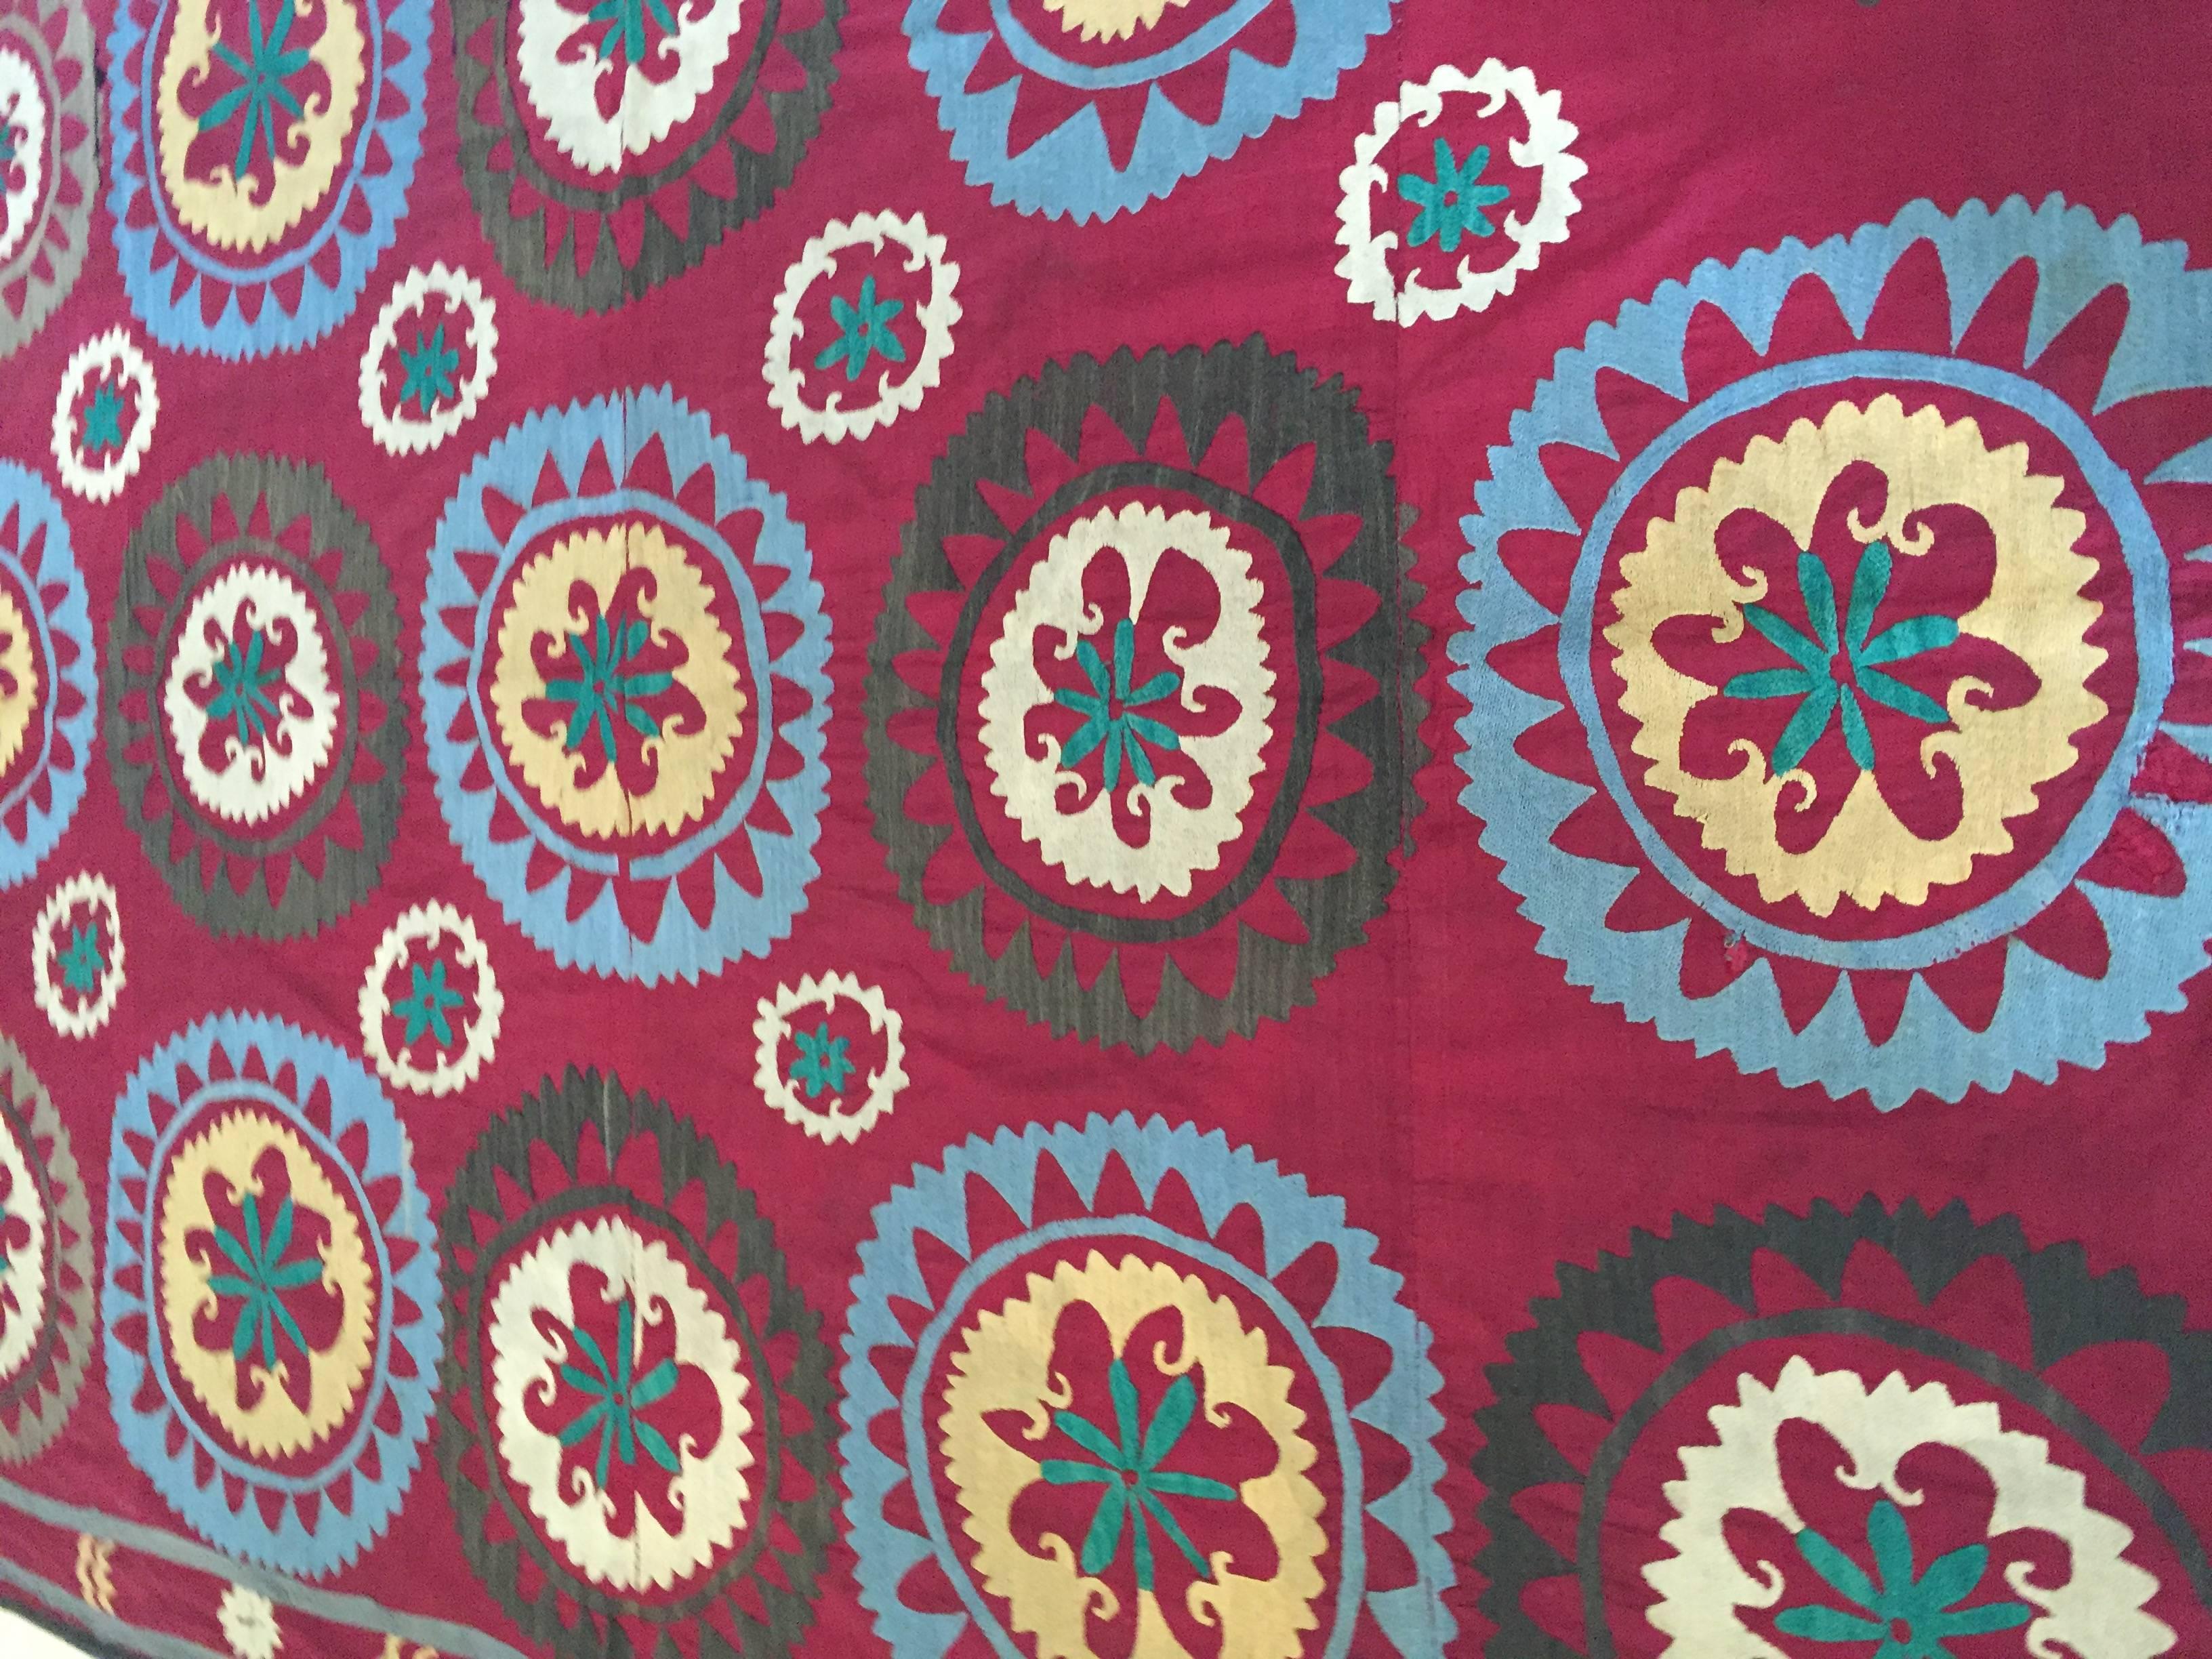 Embroidered Large Vintage Uzbek Suzani Needlework Textile Blanket or Tapestry